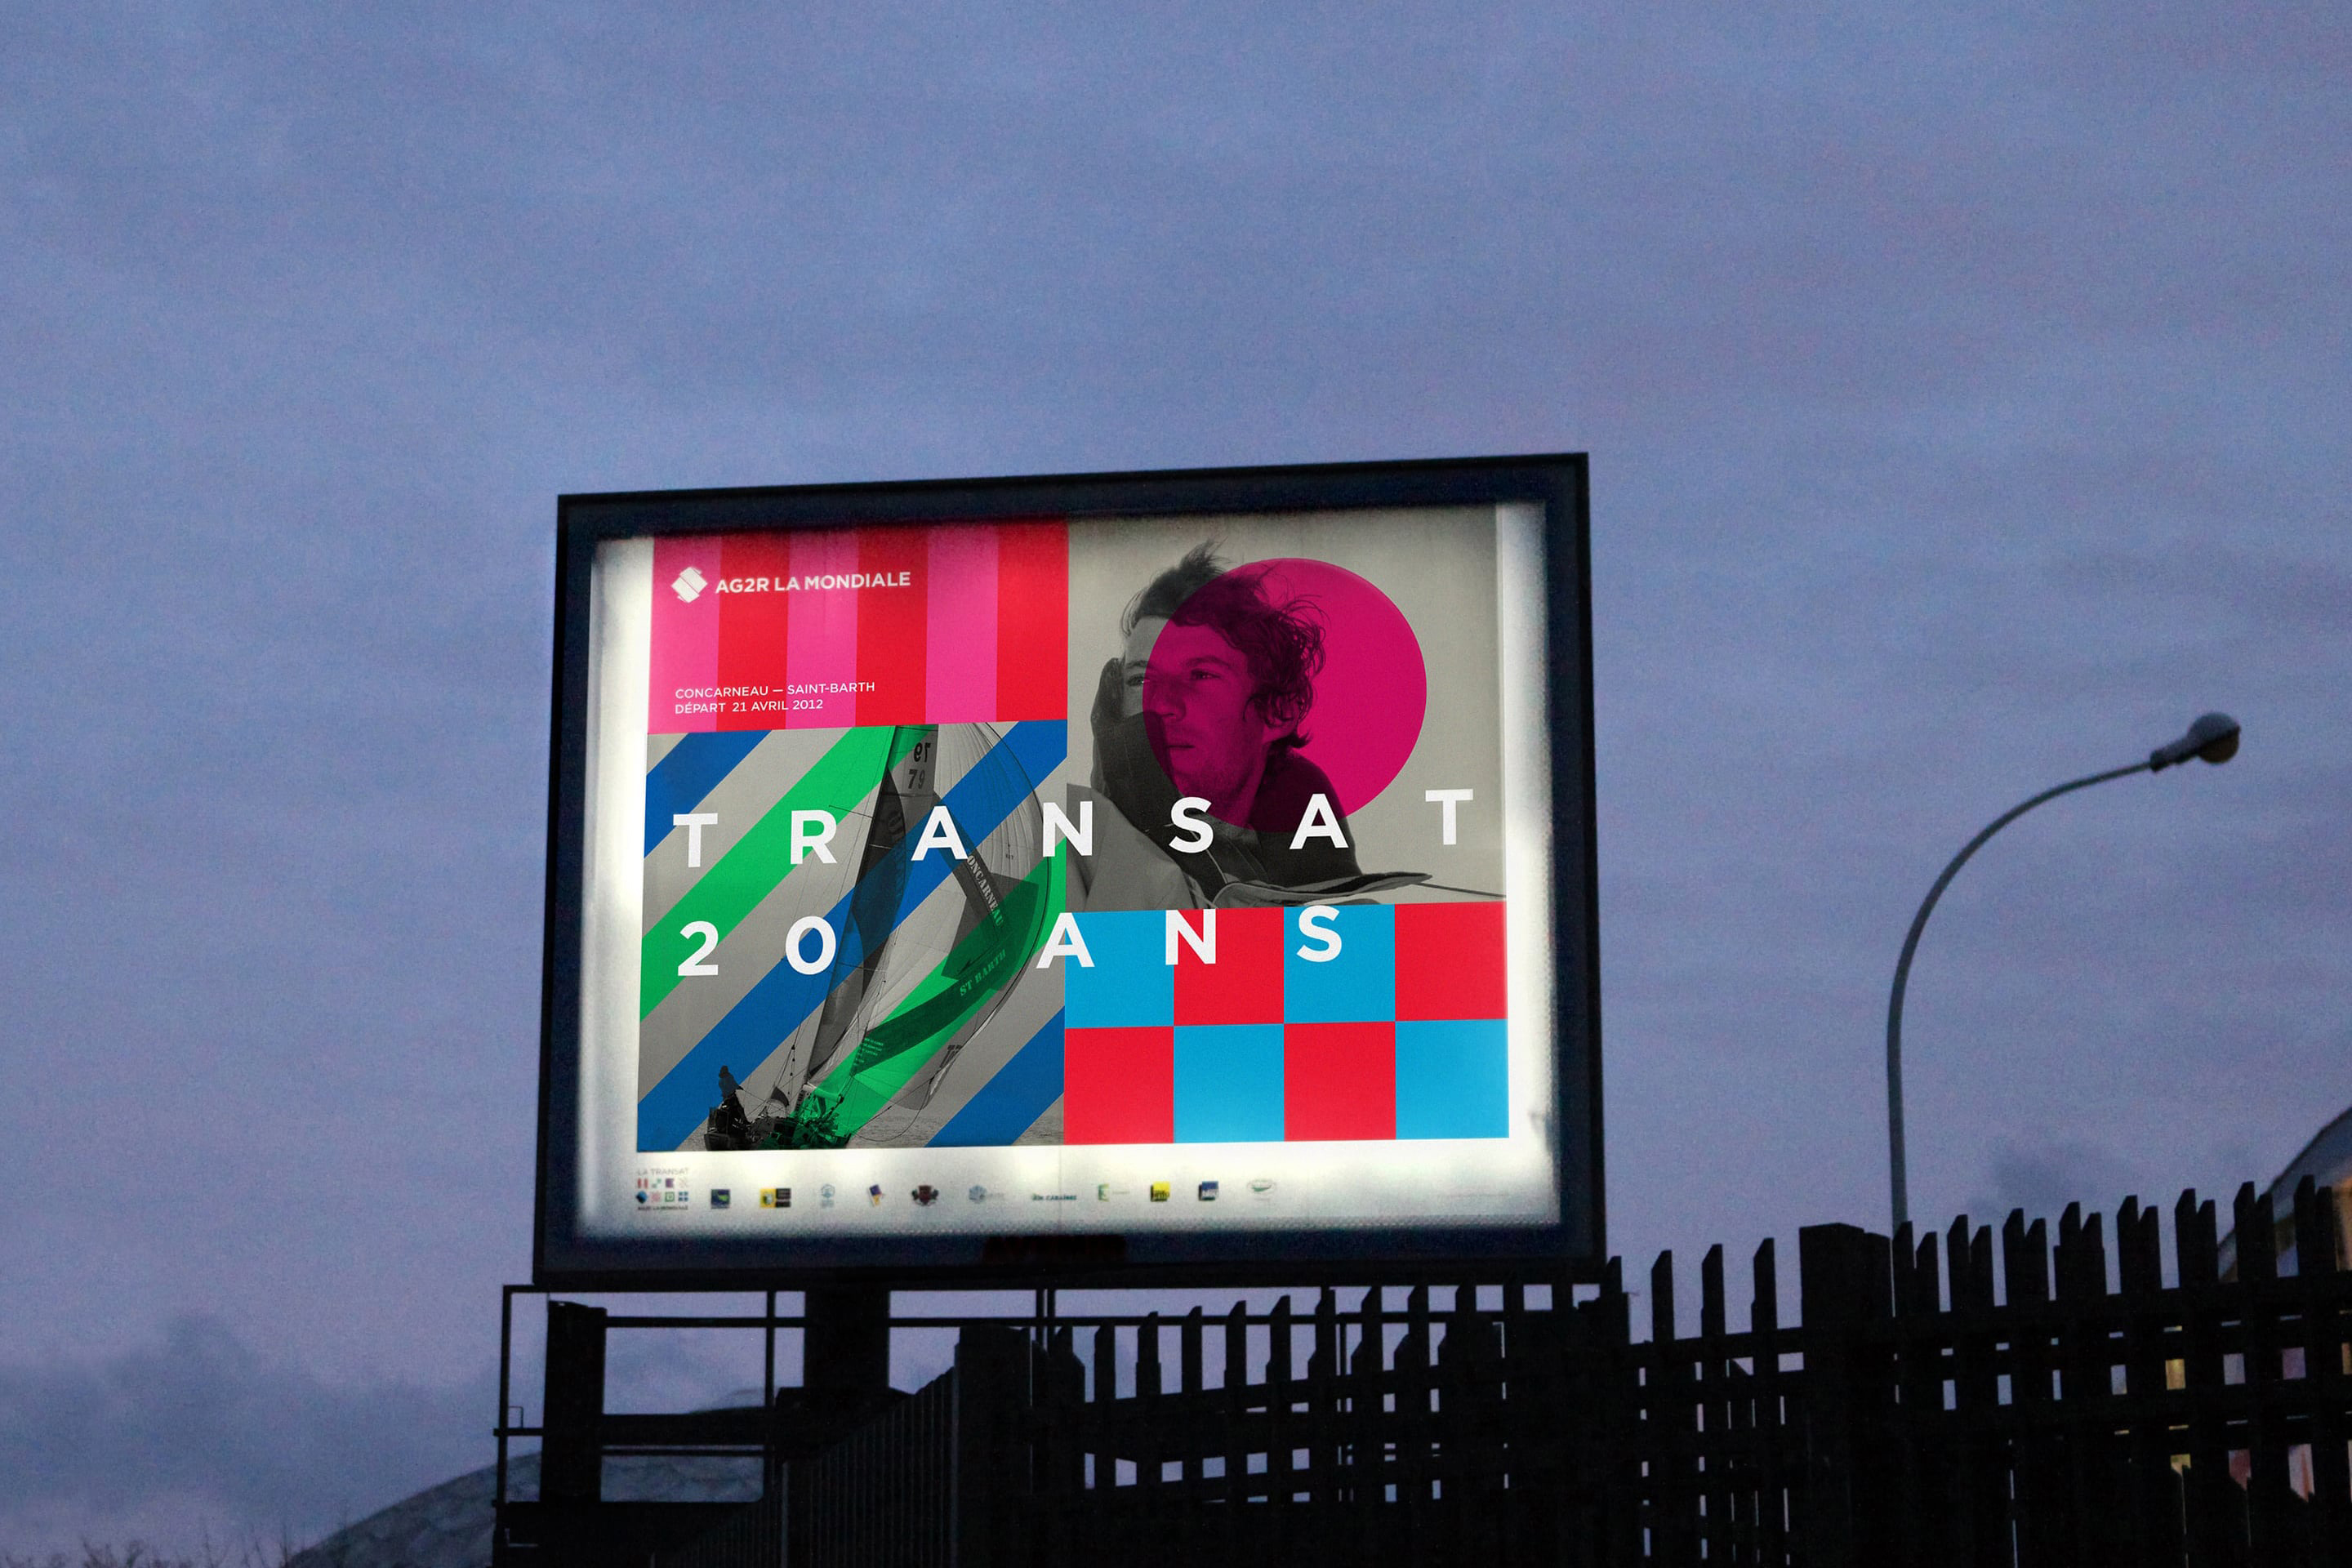 studio dumbar design visual brand identity AG2R LA MONDIALE French insurance company outdoor poster design for Transat